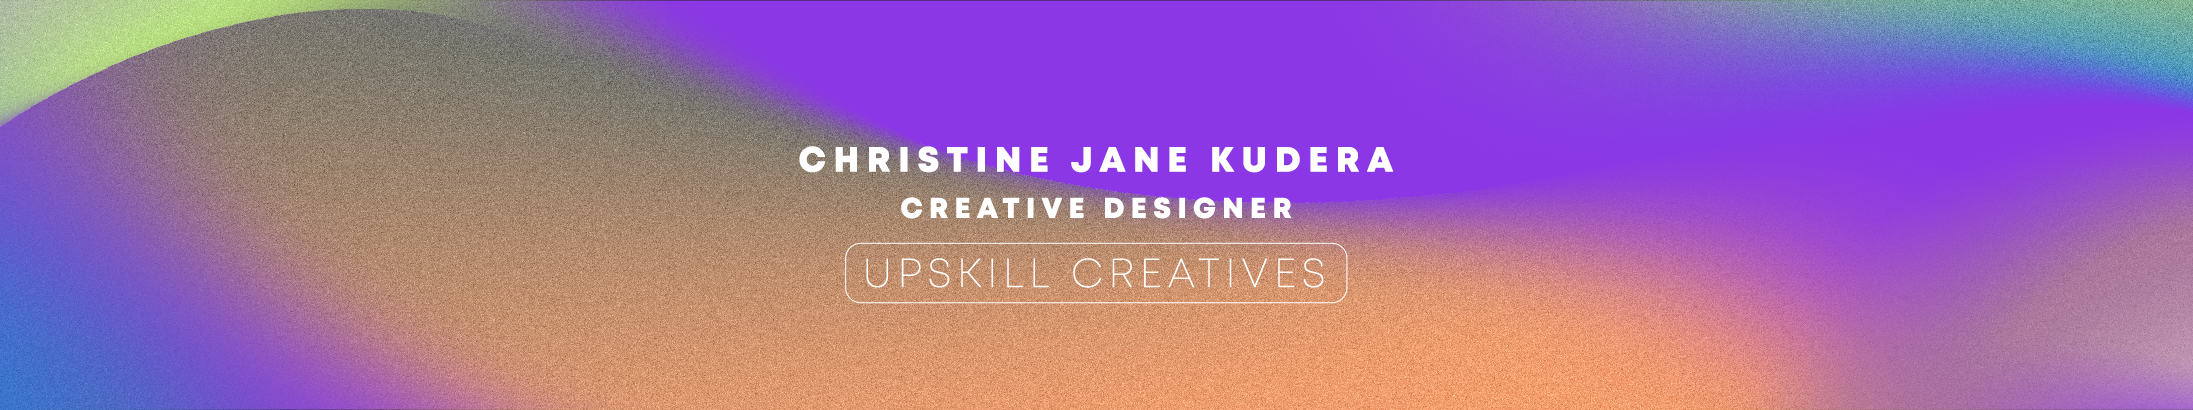 Christine Jane Kudera's profile banner